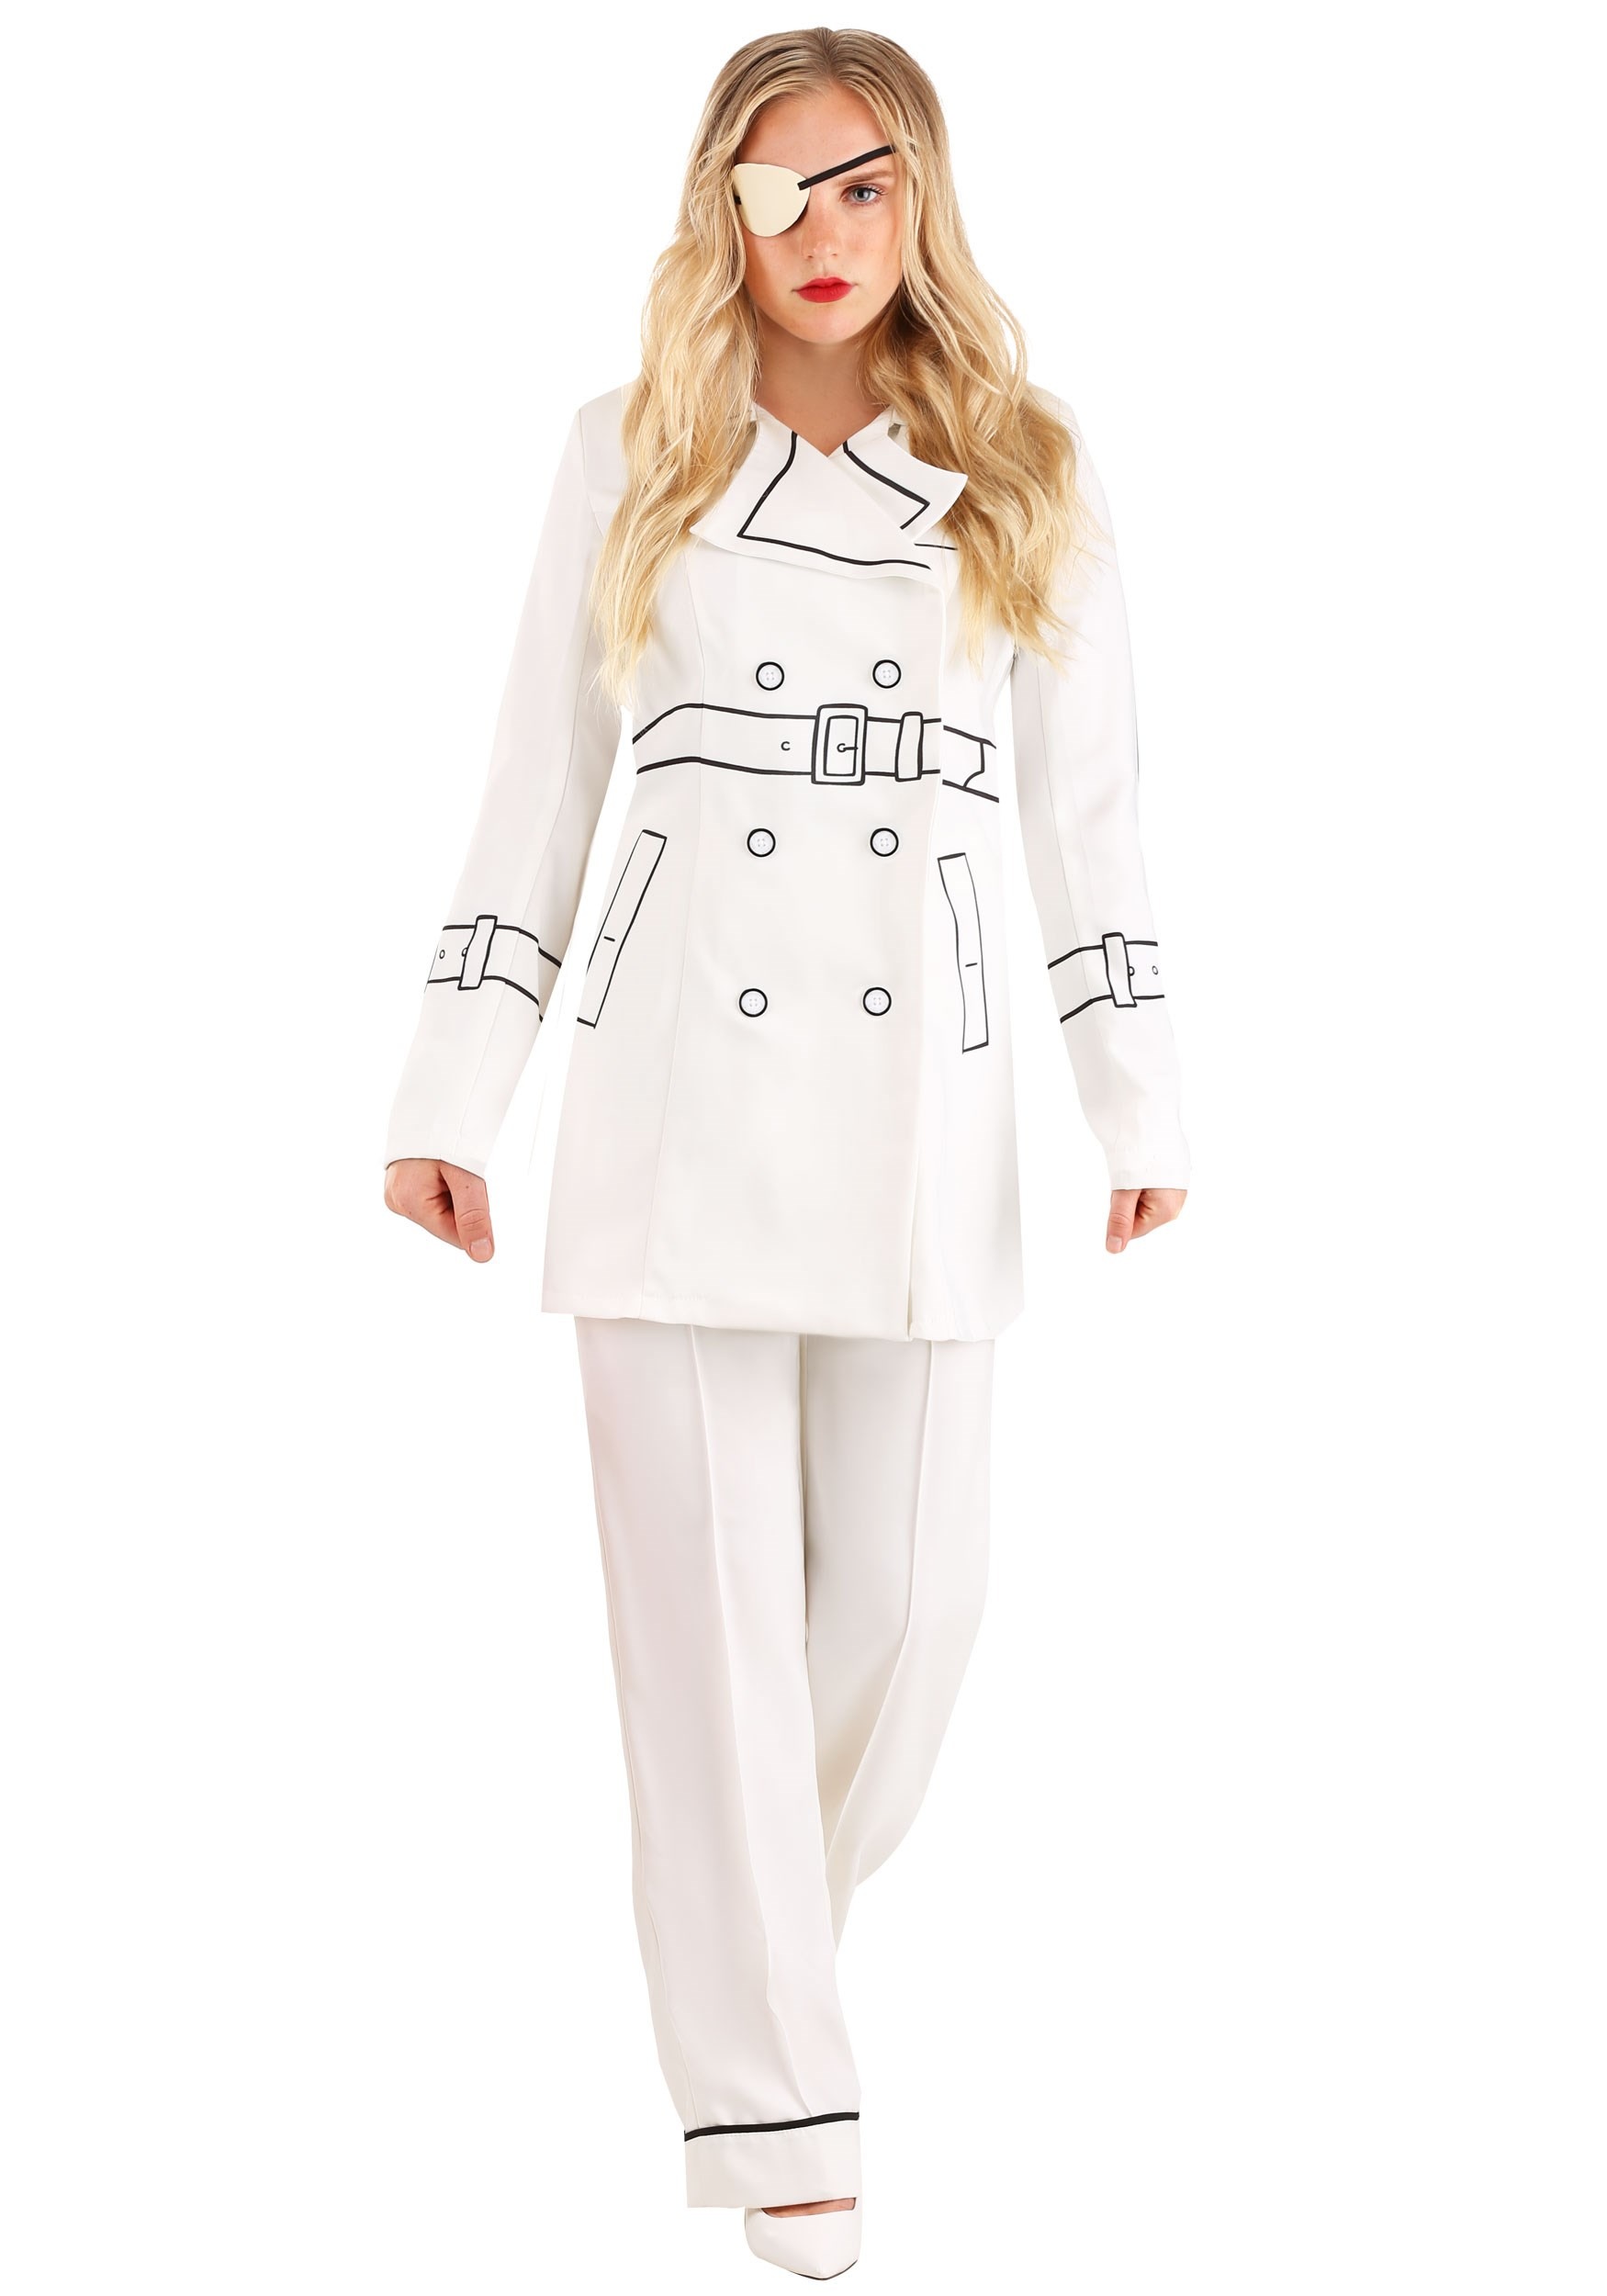 Kill Bill Elle Driver Trench Coat for Women's Costume